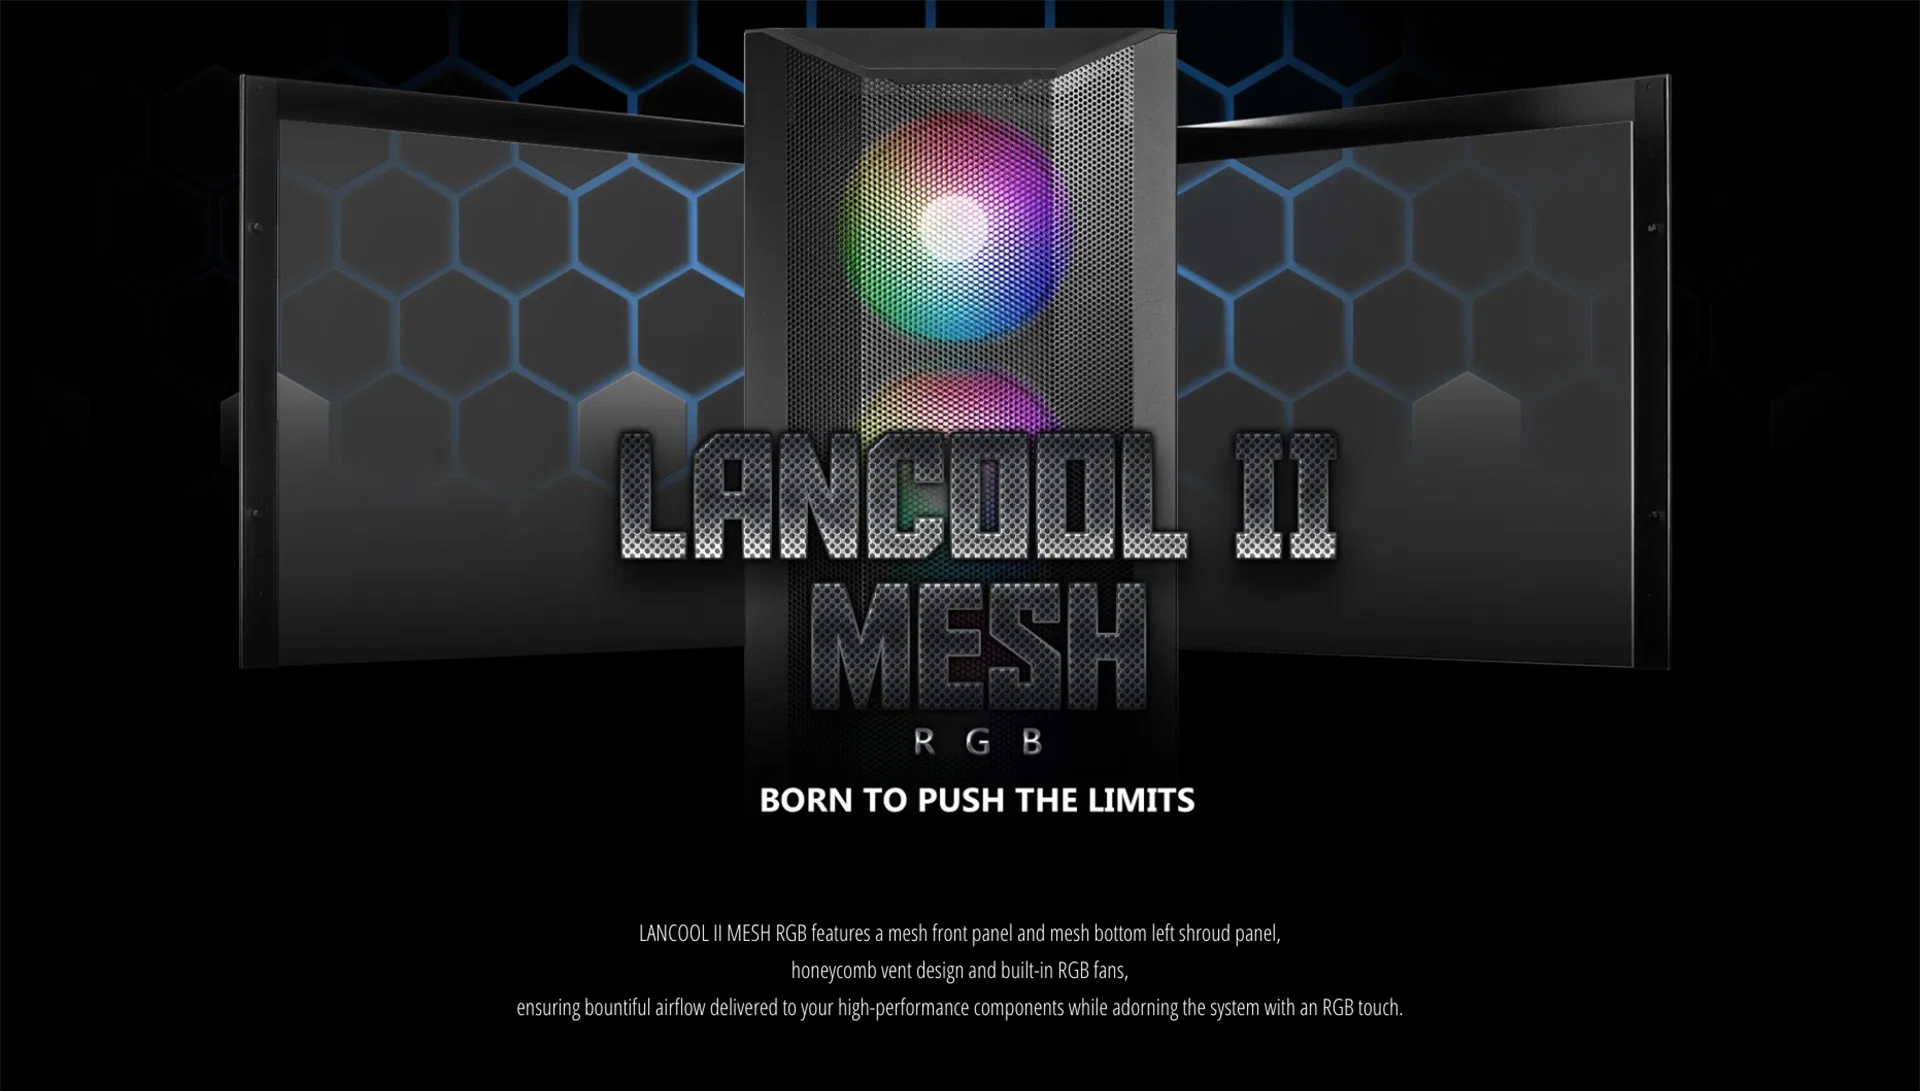 LANCOOL II MESH performance – LIAN LI is a Leading Provider of PC